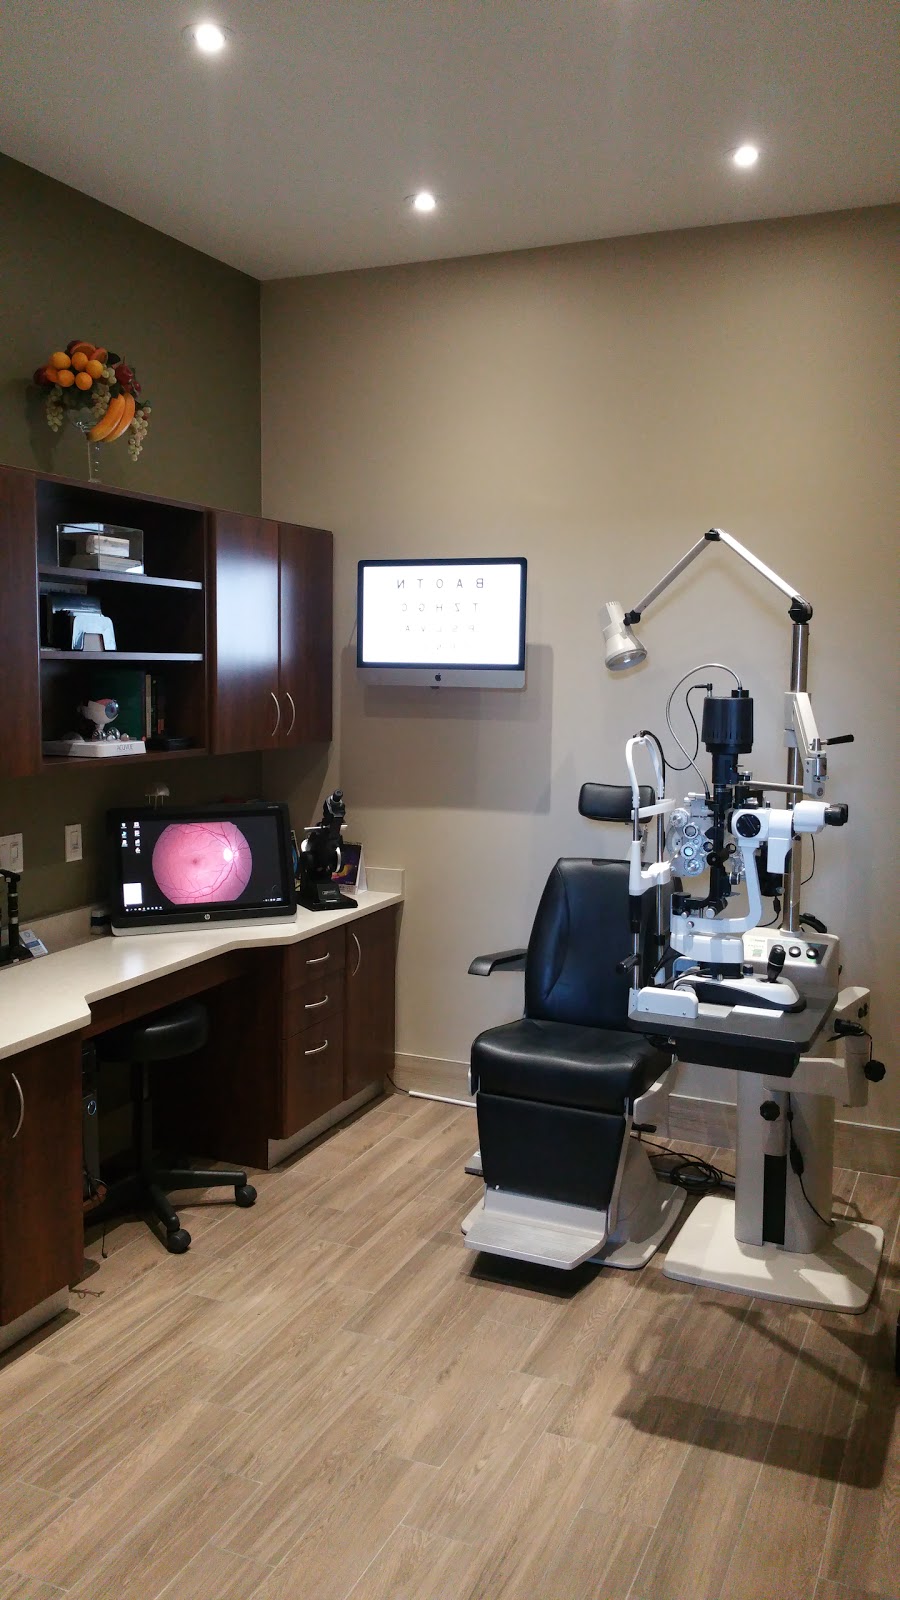 Dr. Michael Lam Optometry Eye Care | 160 Stevenson Rd S #3, Oshawa, ON L1J 5M2, Canada | Phone: (905) 240-8686